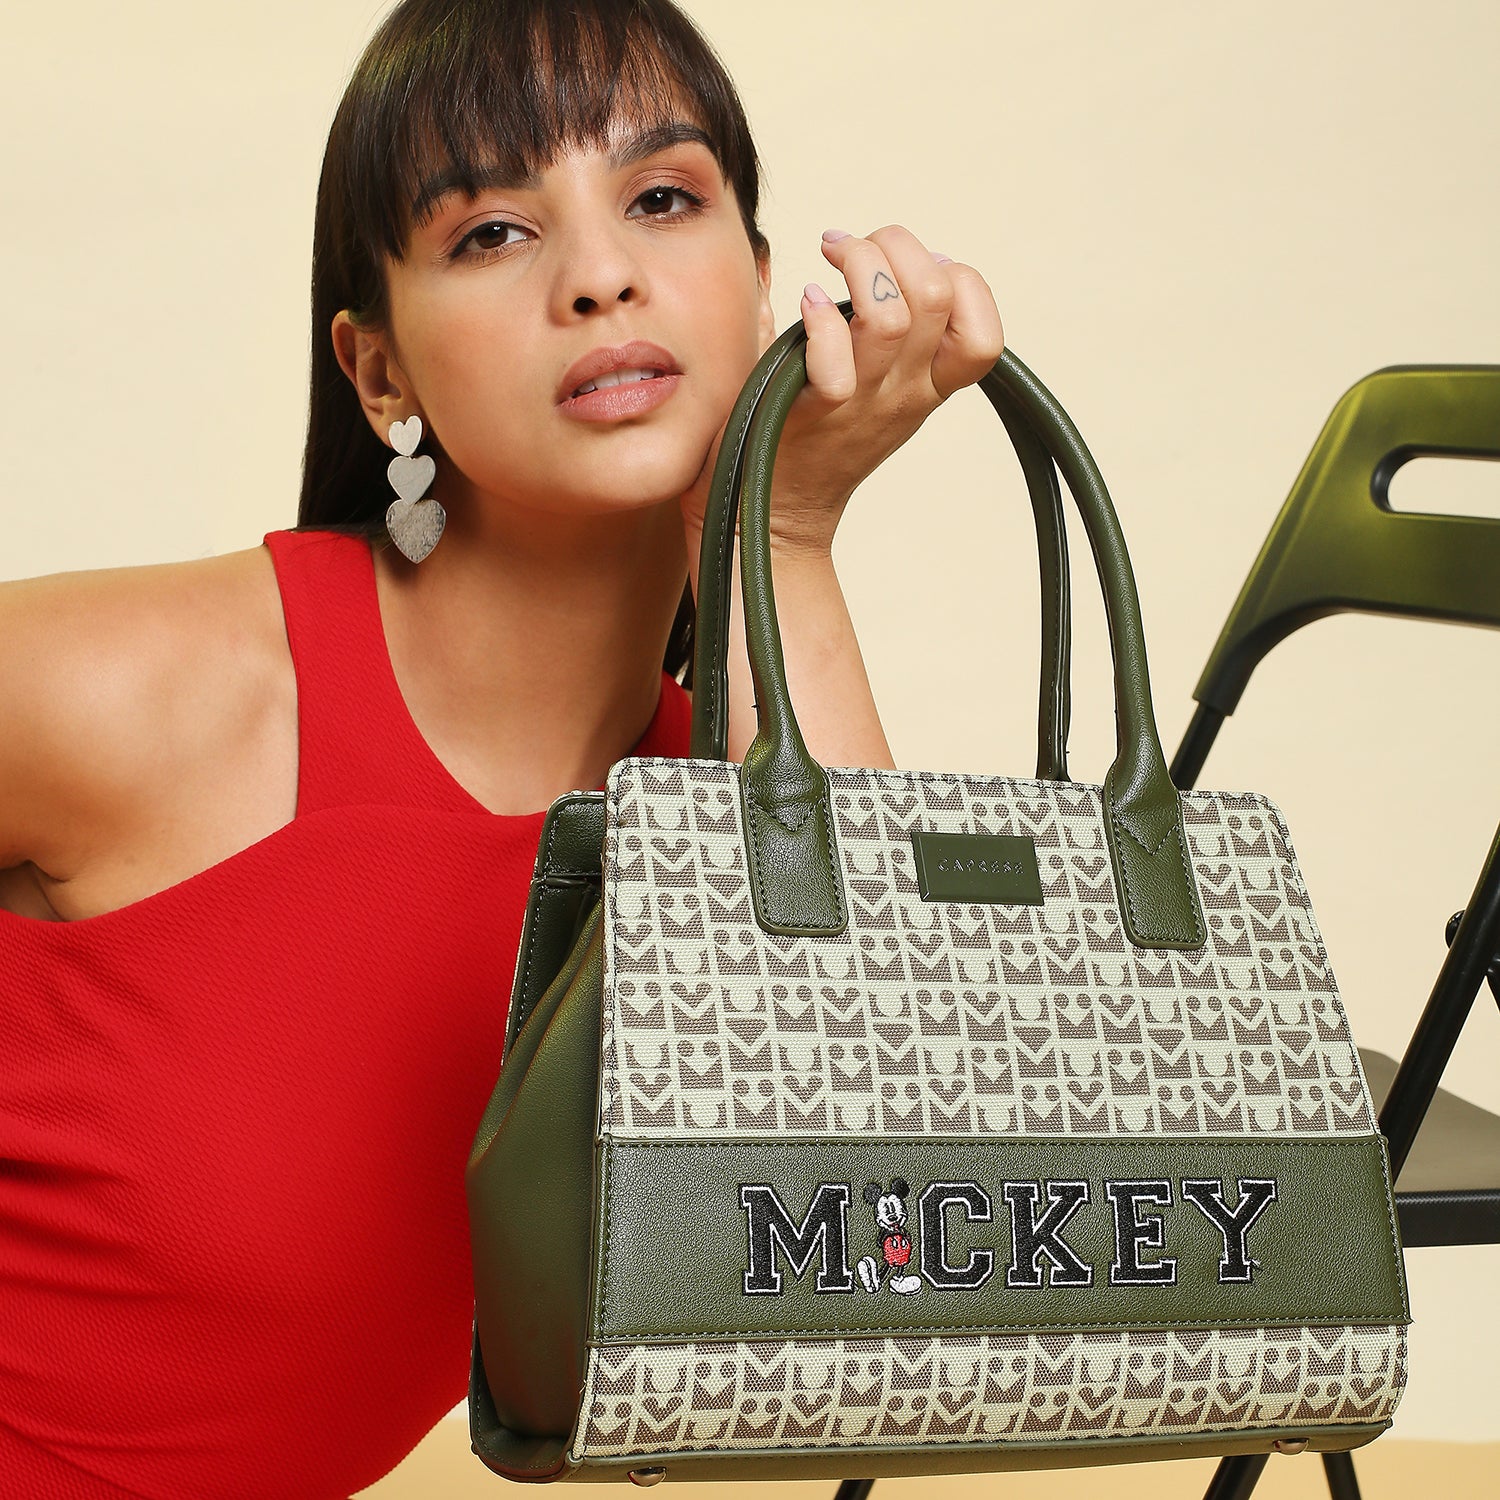 Disney Princess Lady Mickey Mouse Handbag Women Messenger Bag